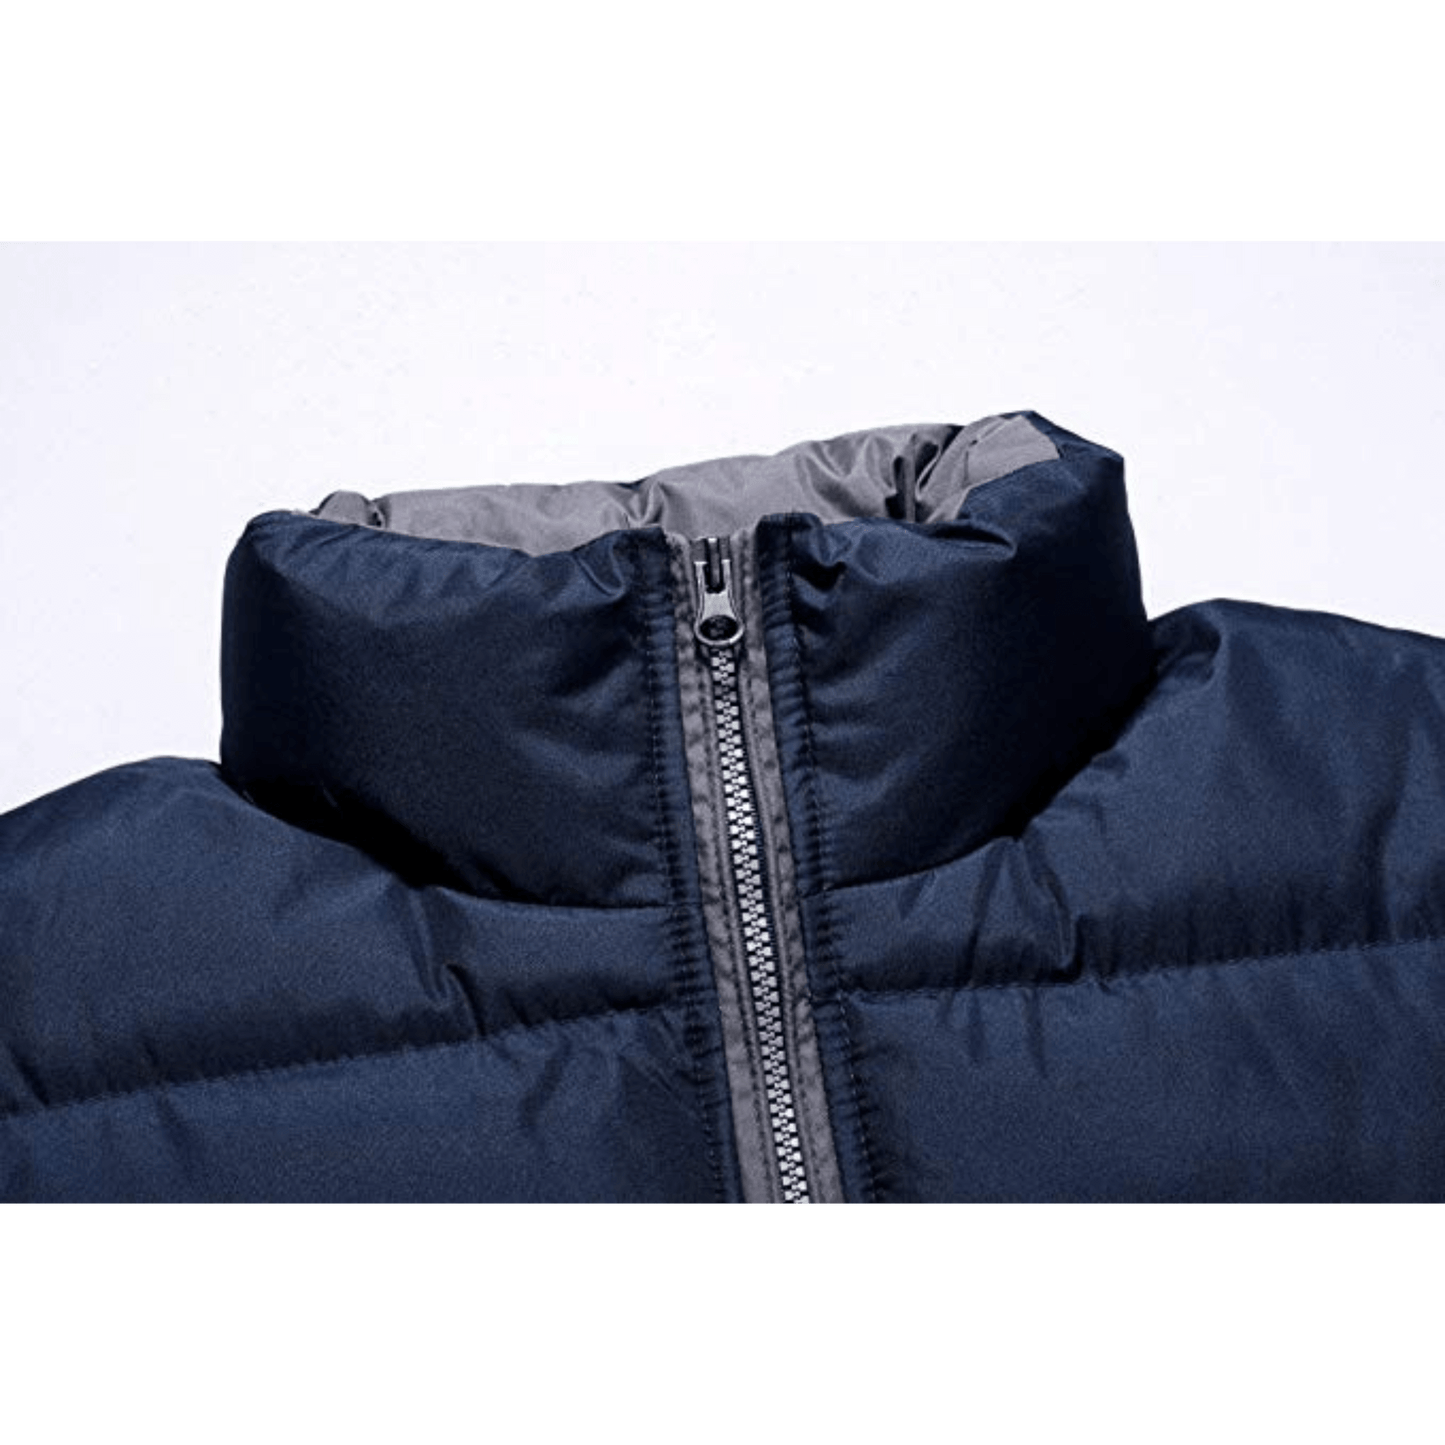 U2Wear Men's Heavy Quilt Coat, Winter Casual Jacket, Short Classic Puffer, Water Resistant, Bomber Jacket